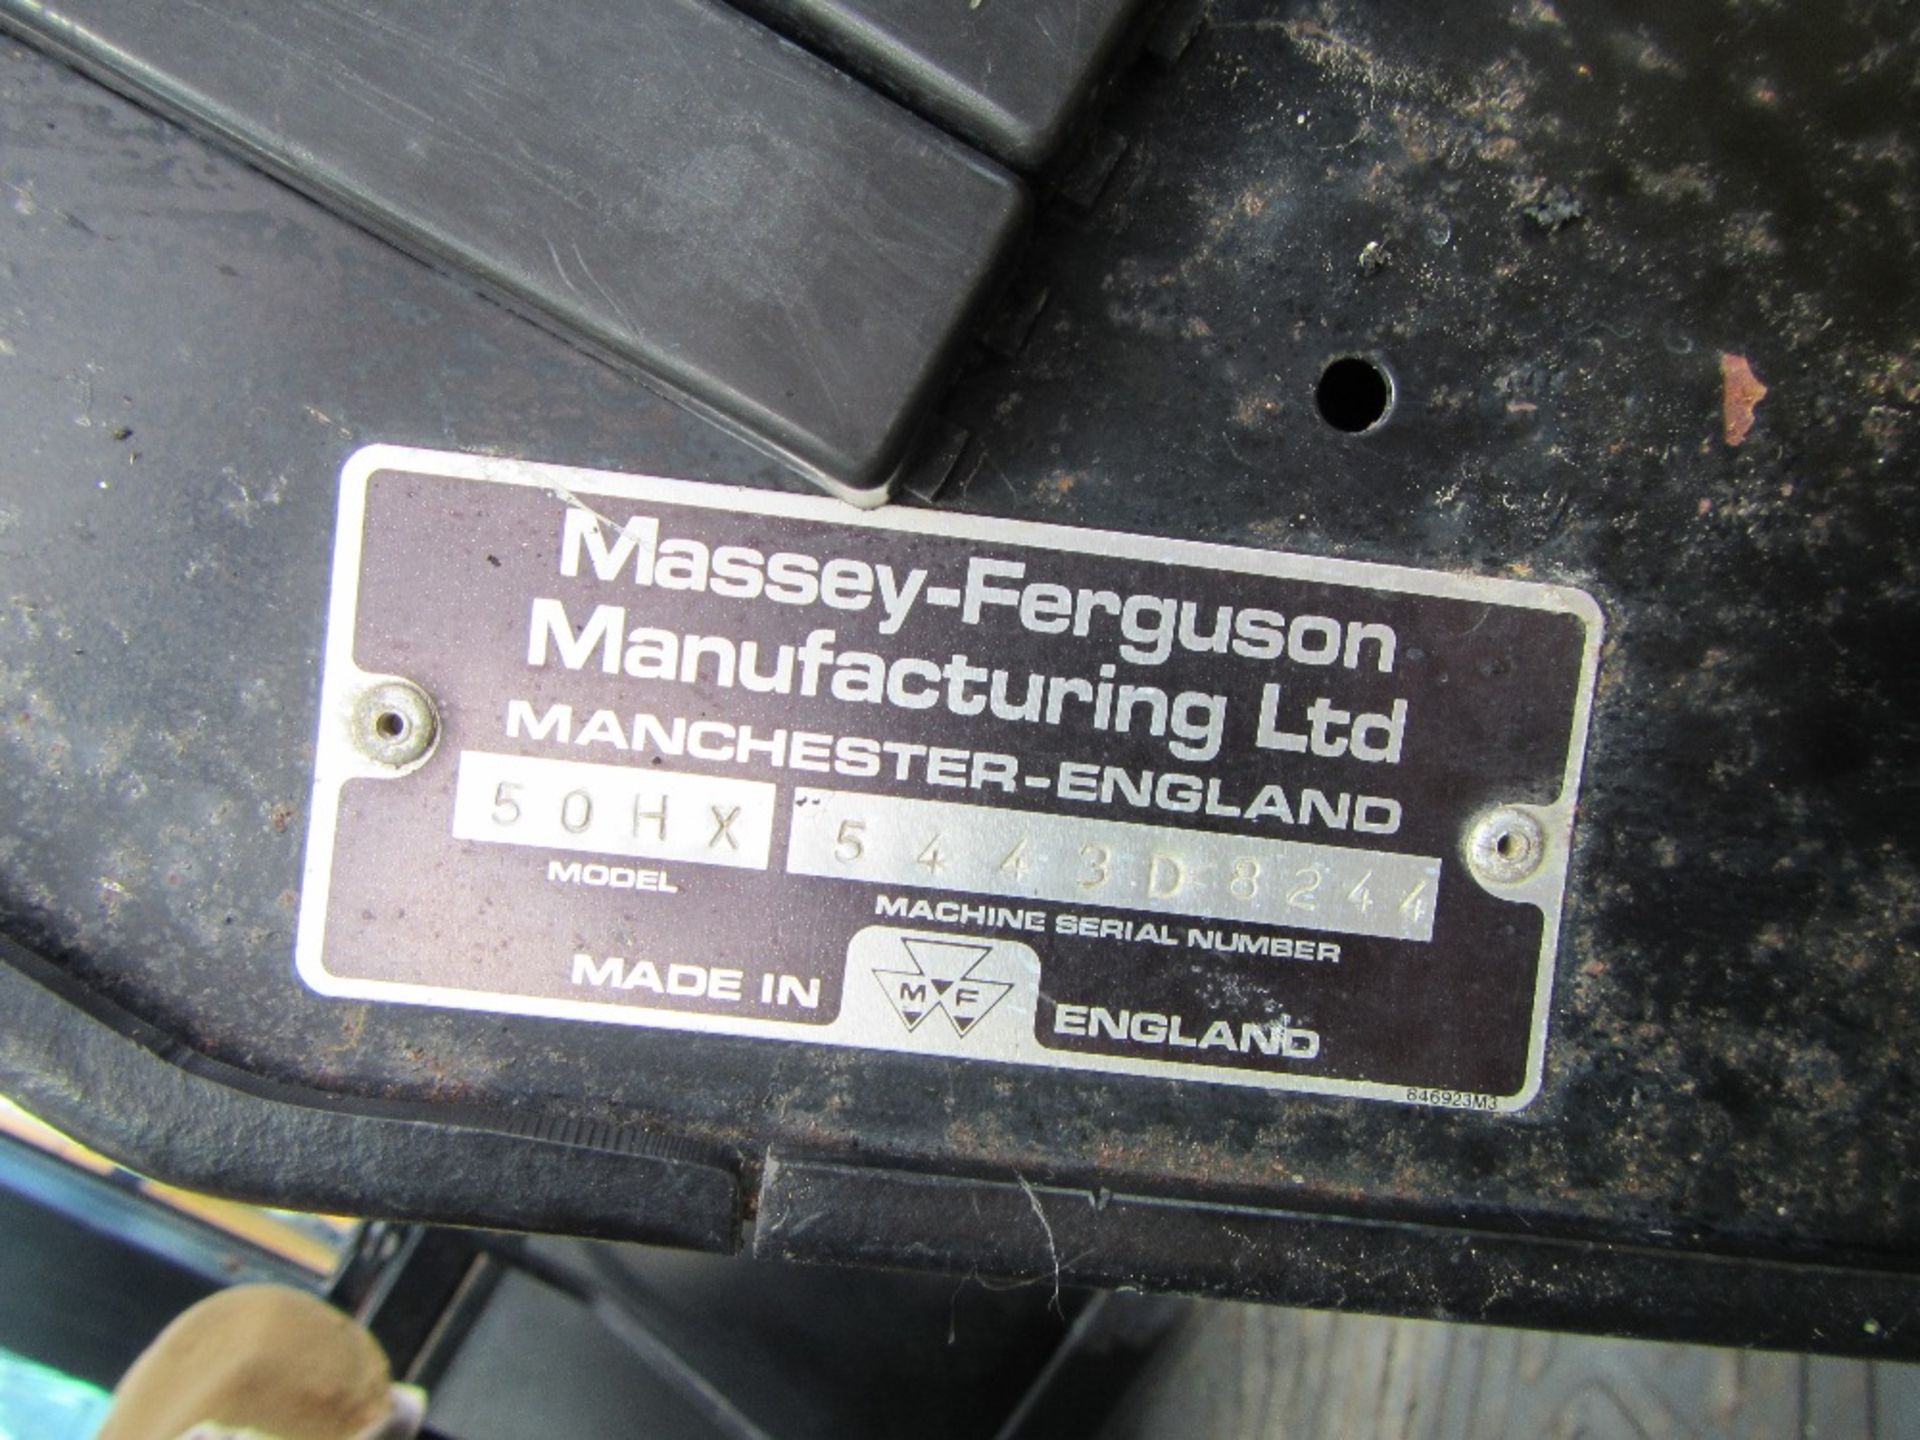 1989 Massey Ferguson 50HX 4wd 4 in 3 Extra Dig Digger Loader Reg. No. F904 FCC - Image 3 of 4